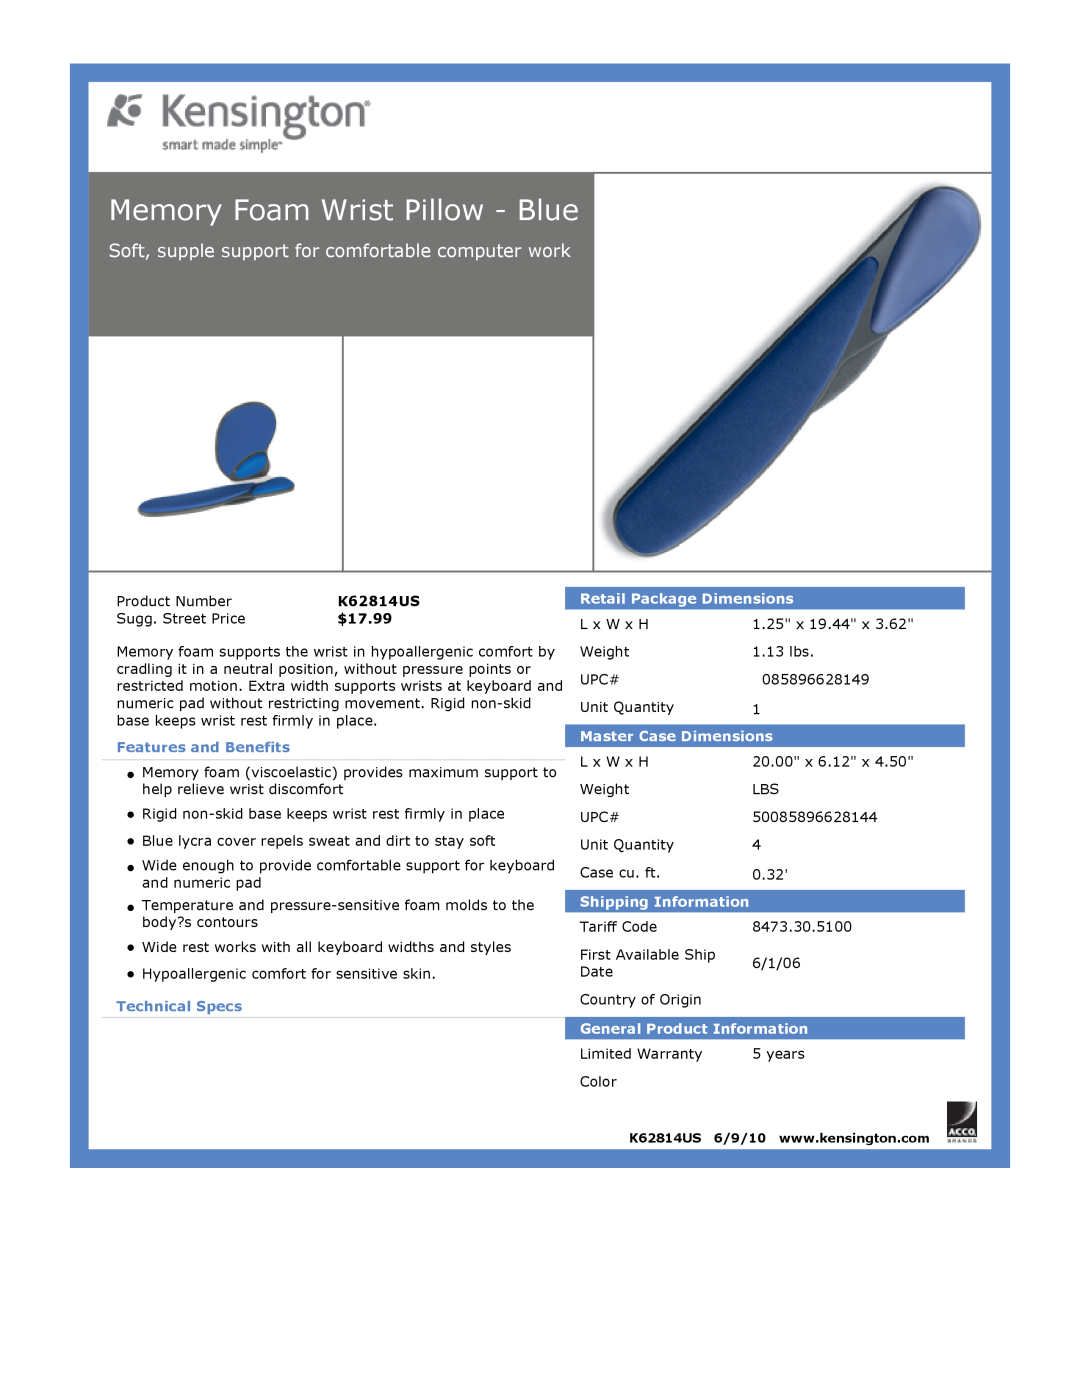 Kensington EU64325 Memory Foam Wrist Pillow - Blue, $17.99, Features and Benefits, Technical Specs, Master Case Dimensions 